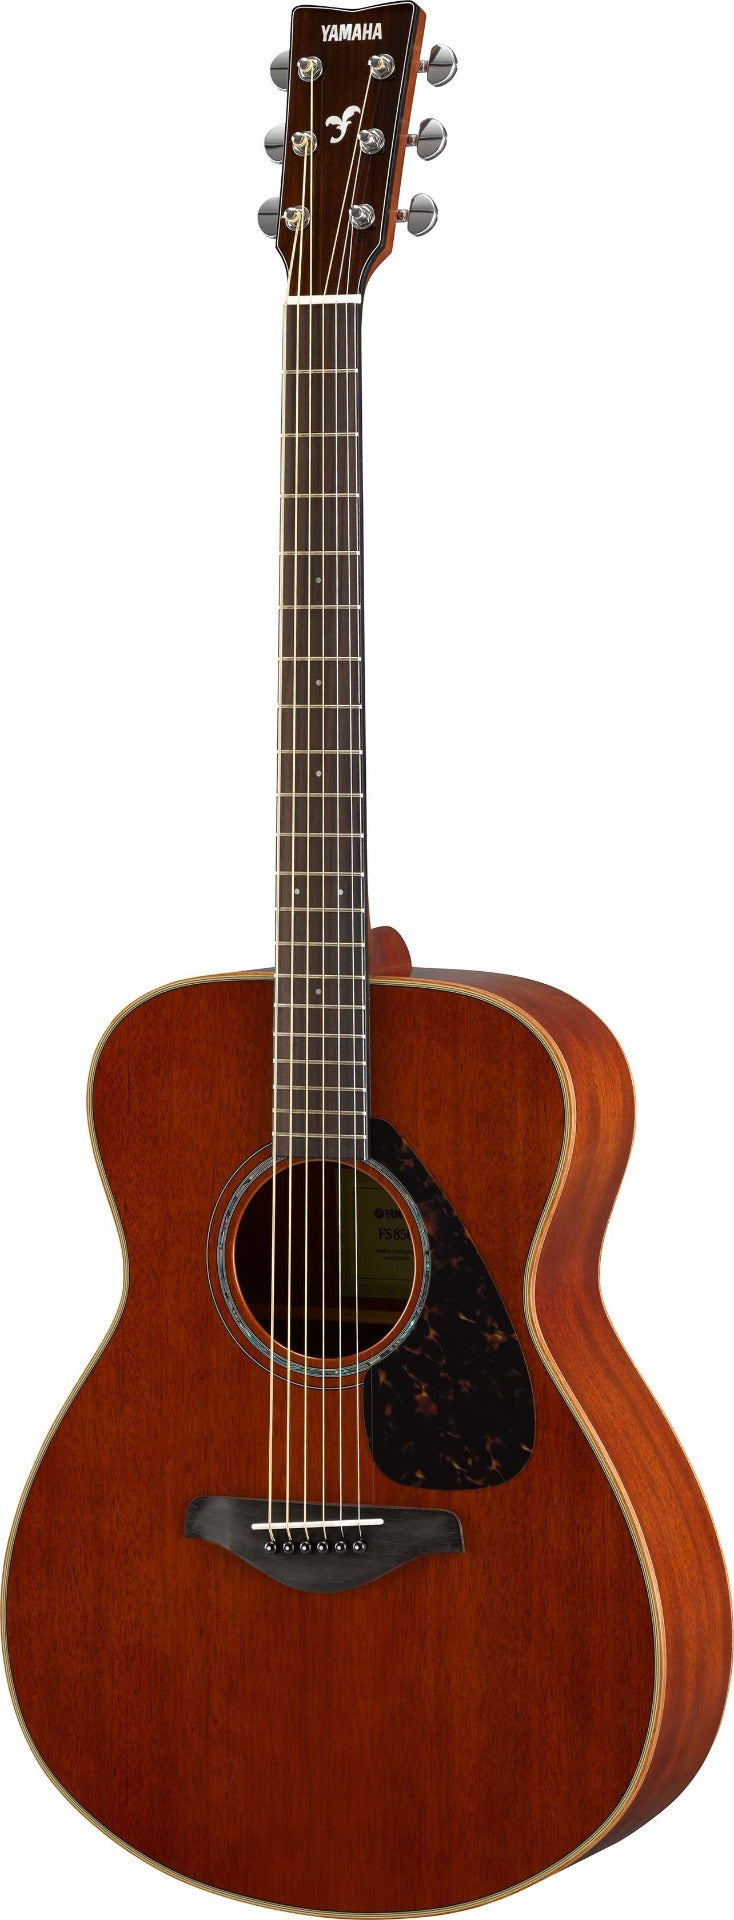 Yamaha FS850 Small Body Solid Top Acoustic Guitar, Mahogany